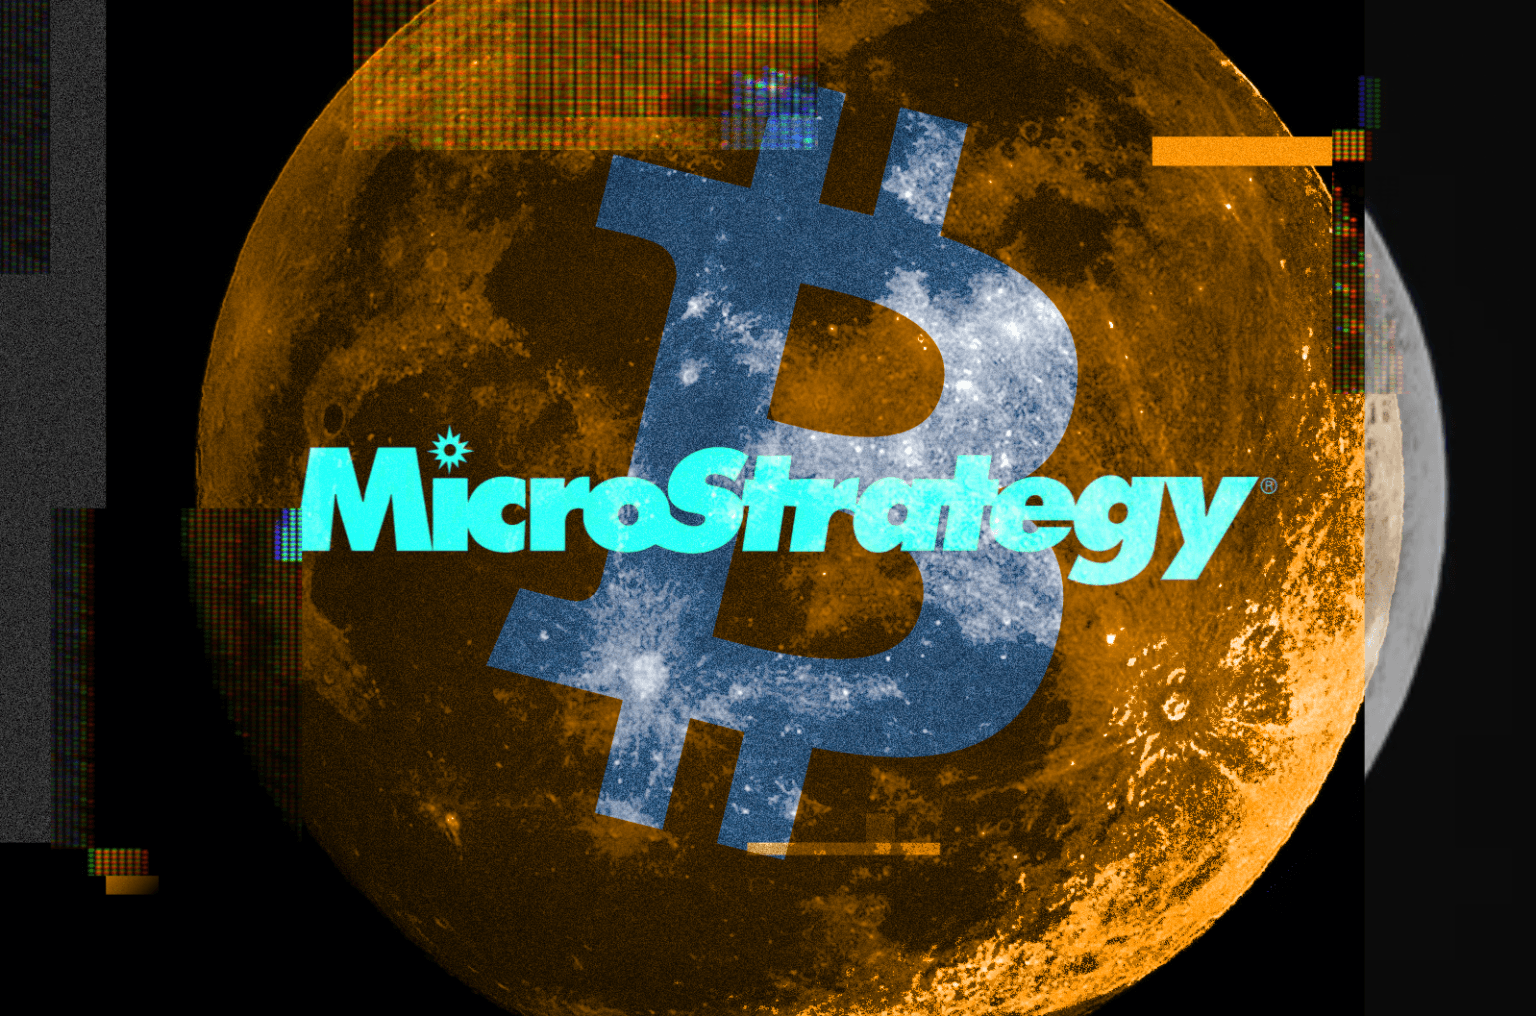 microstrategy-quy-dau-tu-34-nam-tuoi-luon-bao-chi-de-gom-bitcoin-do-ai-lanh-dao-da-phat-trien-ra-sao-1-1680441611.png